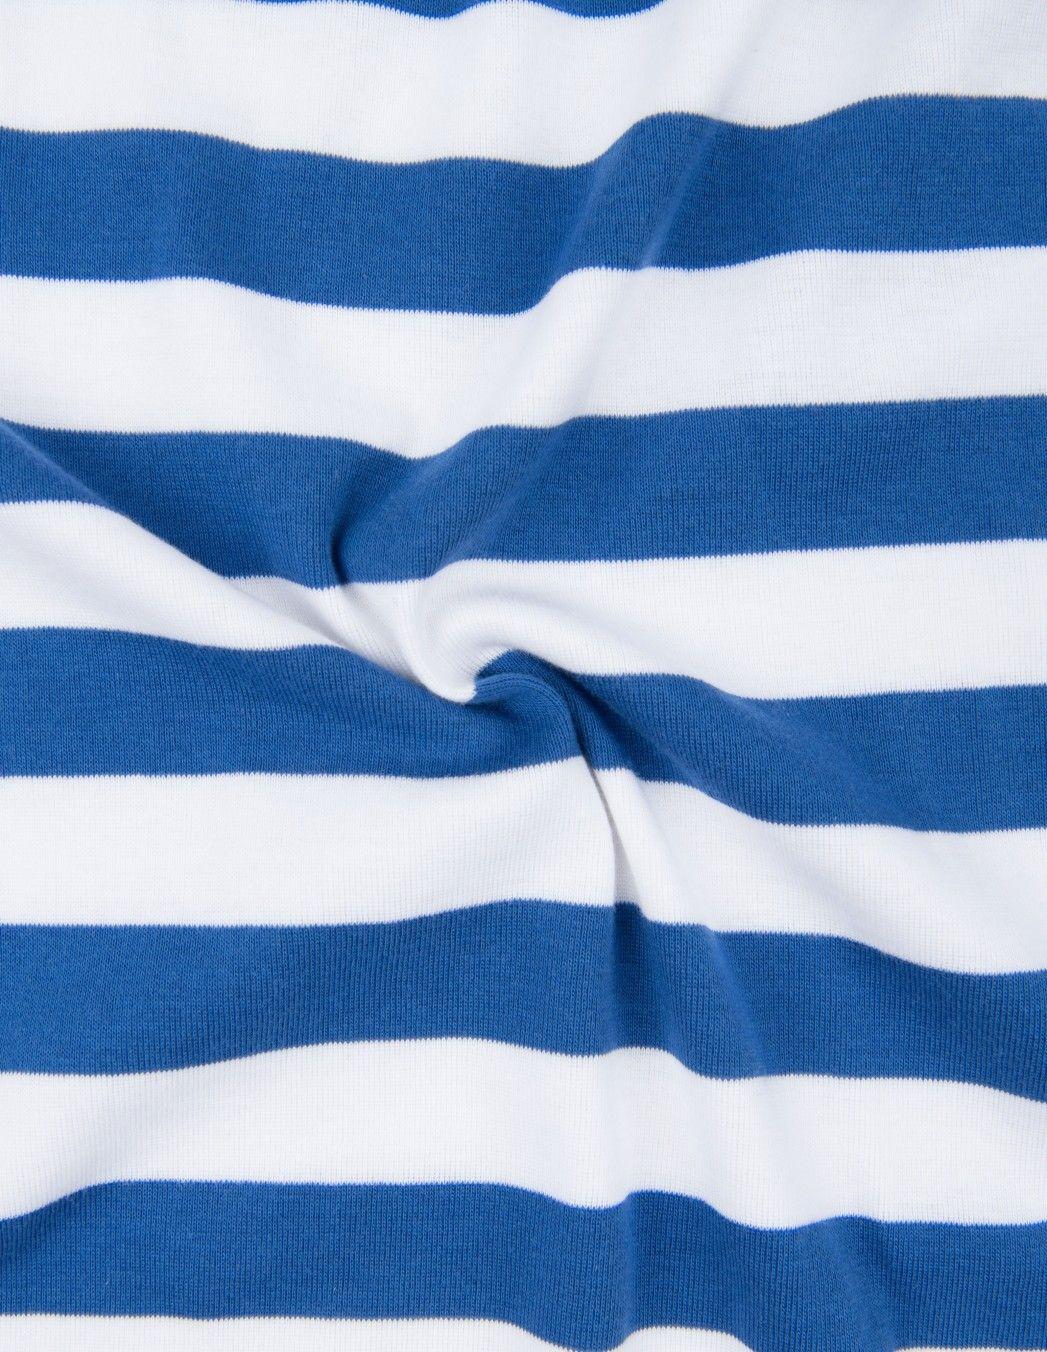 Striped Blue and White Logo - LogoDix